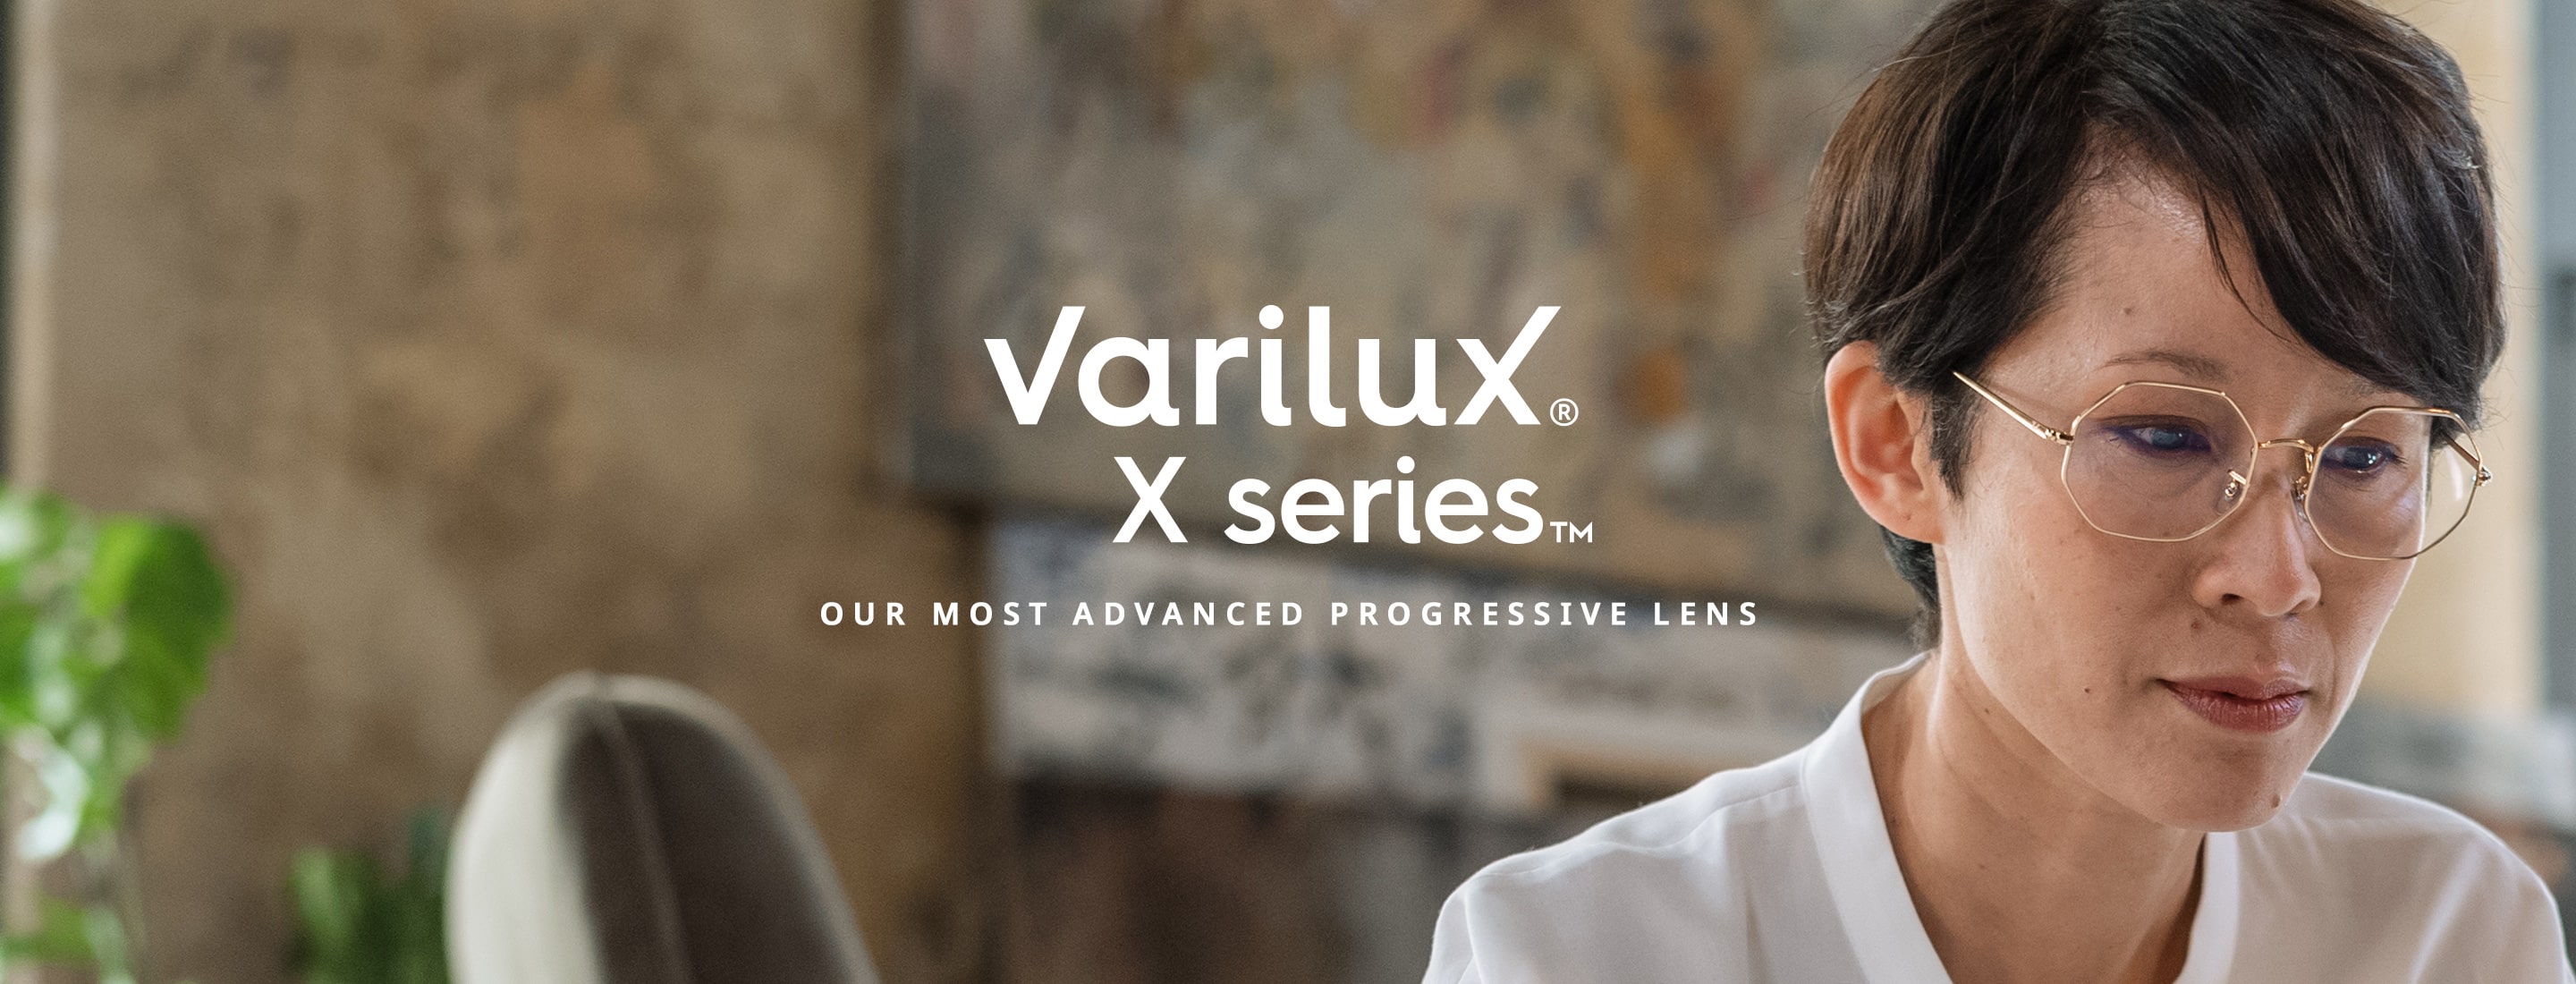 varilux X series - our most advanced progressive lens.